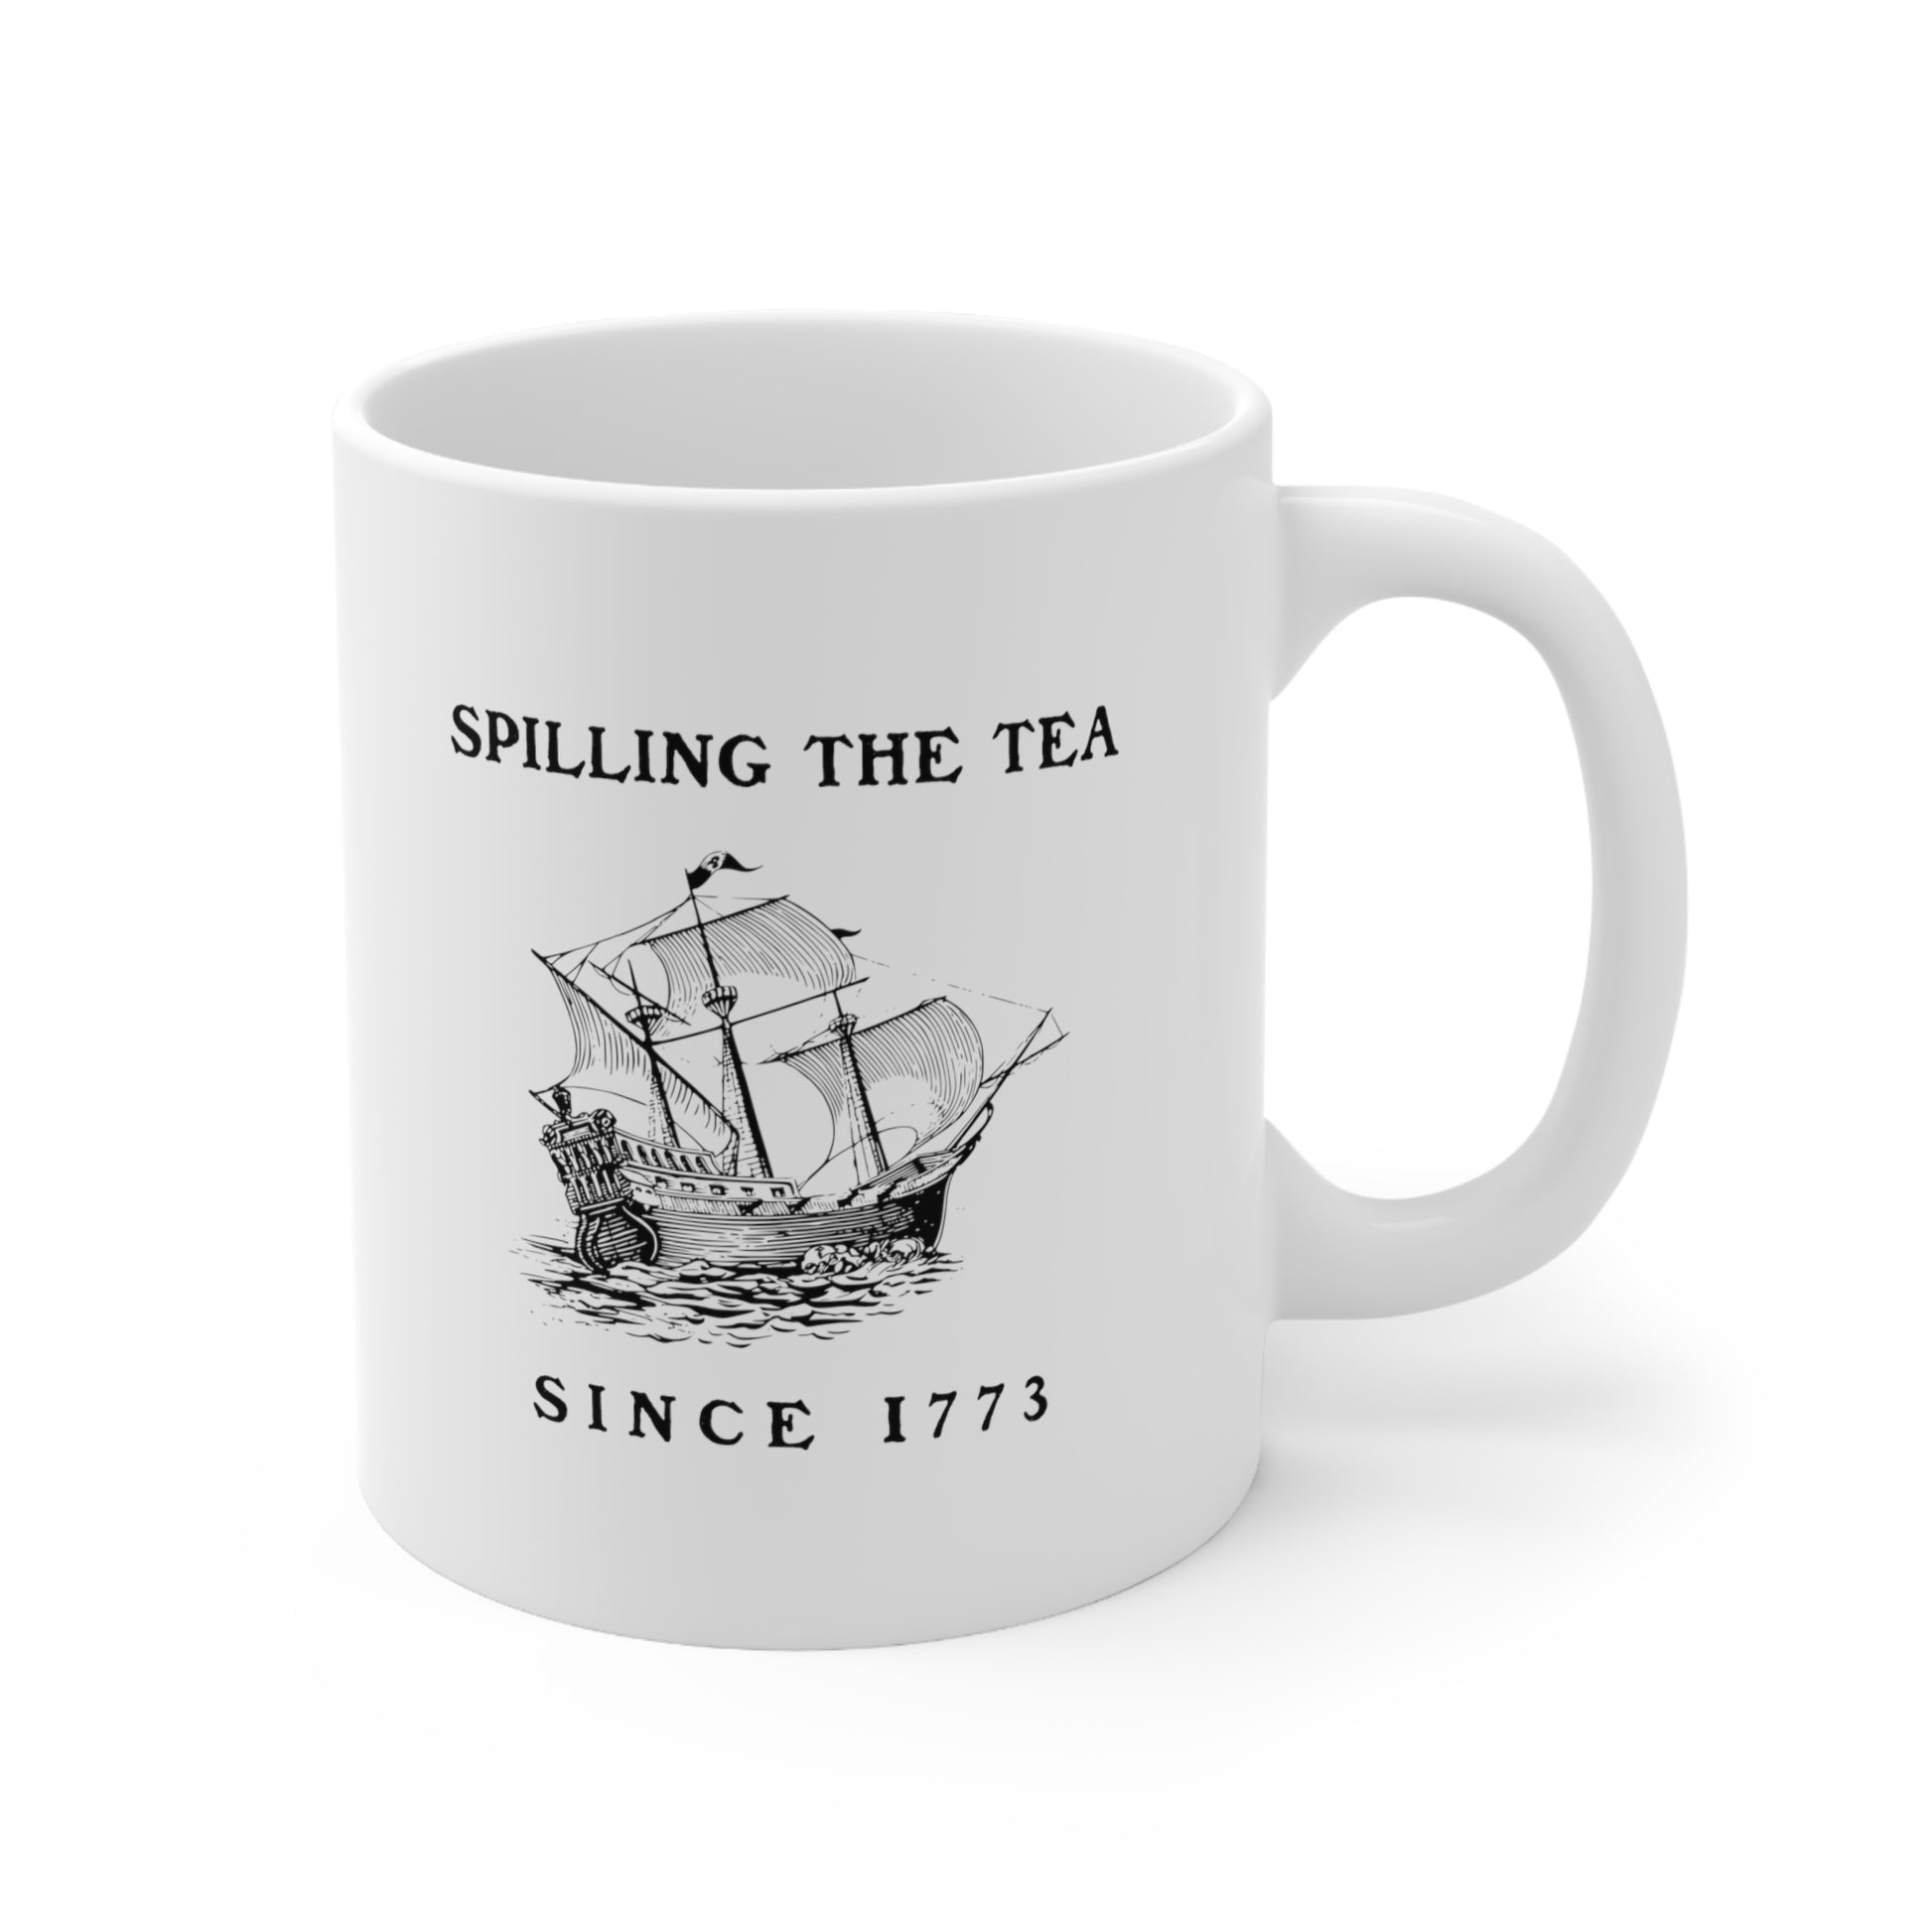 Playful white ceramic mug celebrating the Boston Tea Party